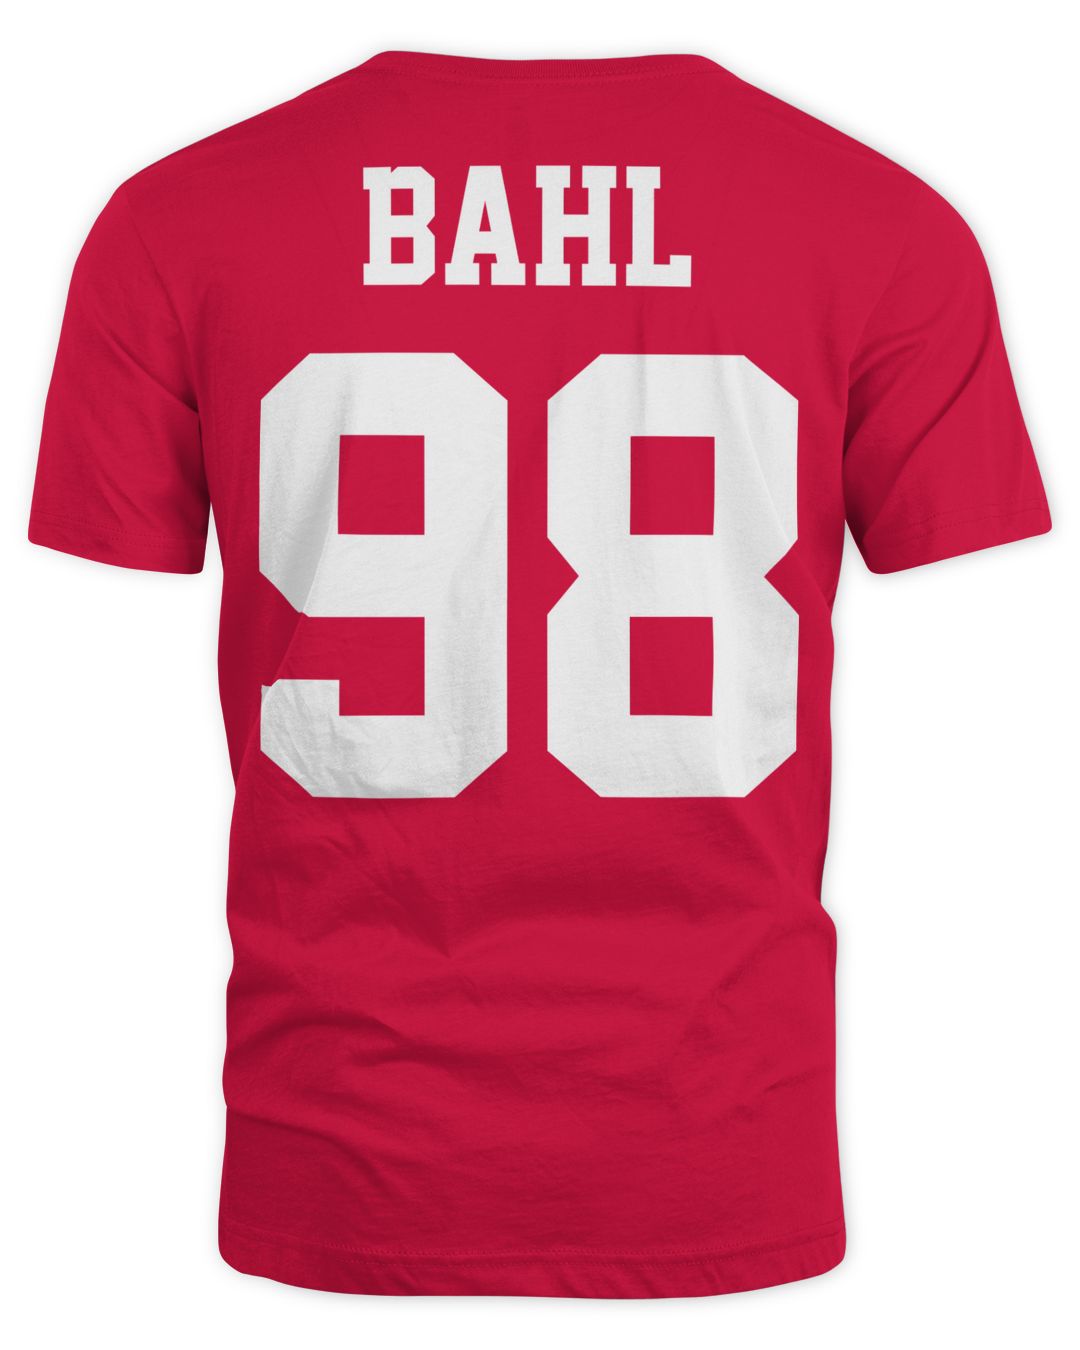 Oklahoma Softball Jordy Bahl 98 Shirt